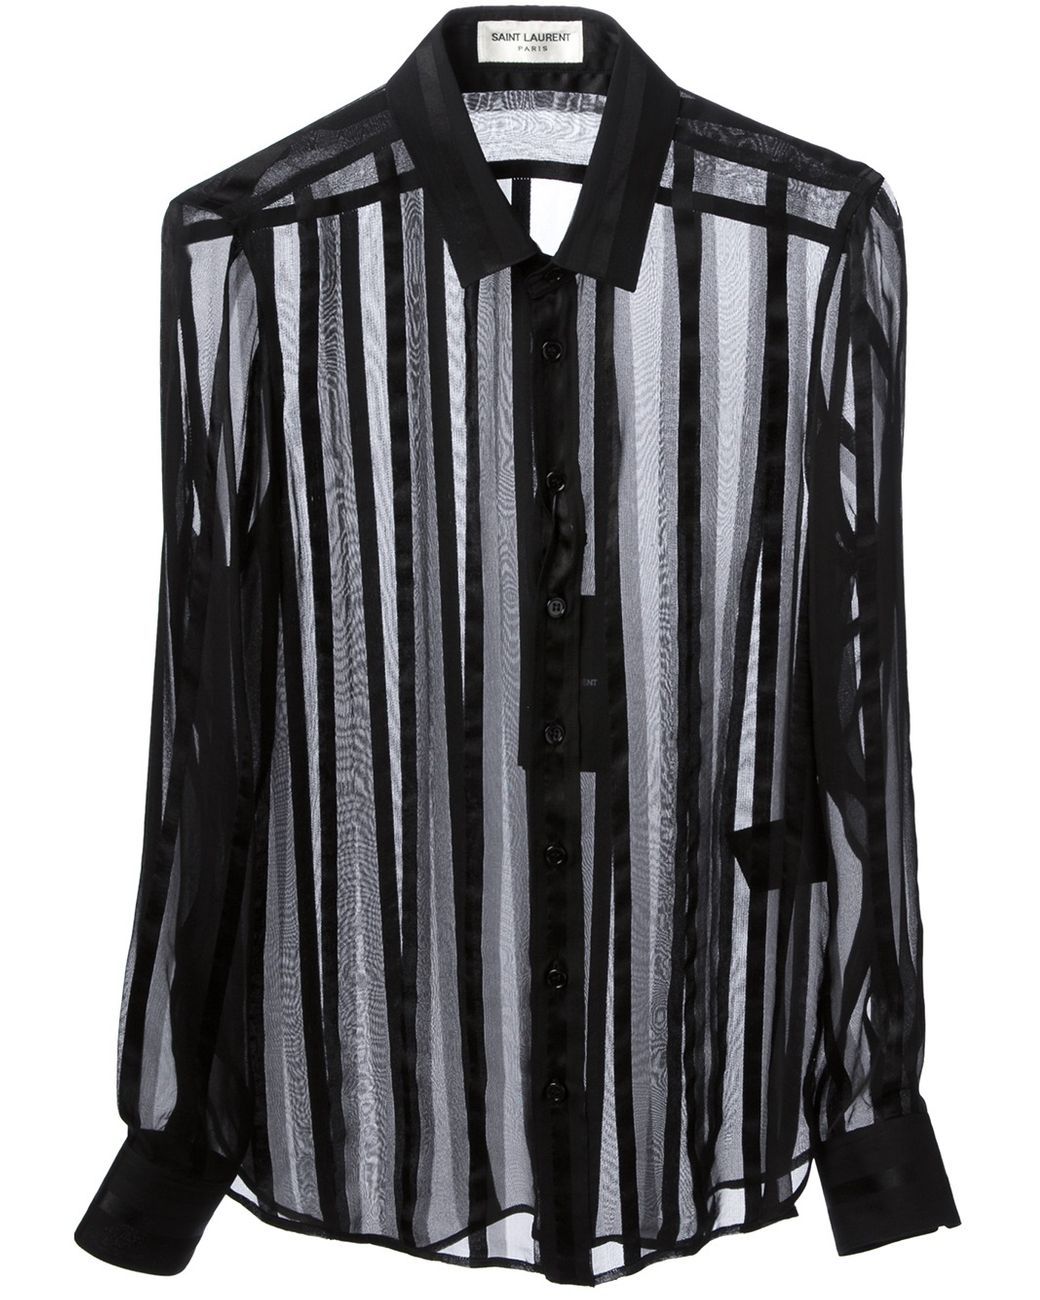 Saint Laurent Sheer Striped Blouse in Black | Lyst